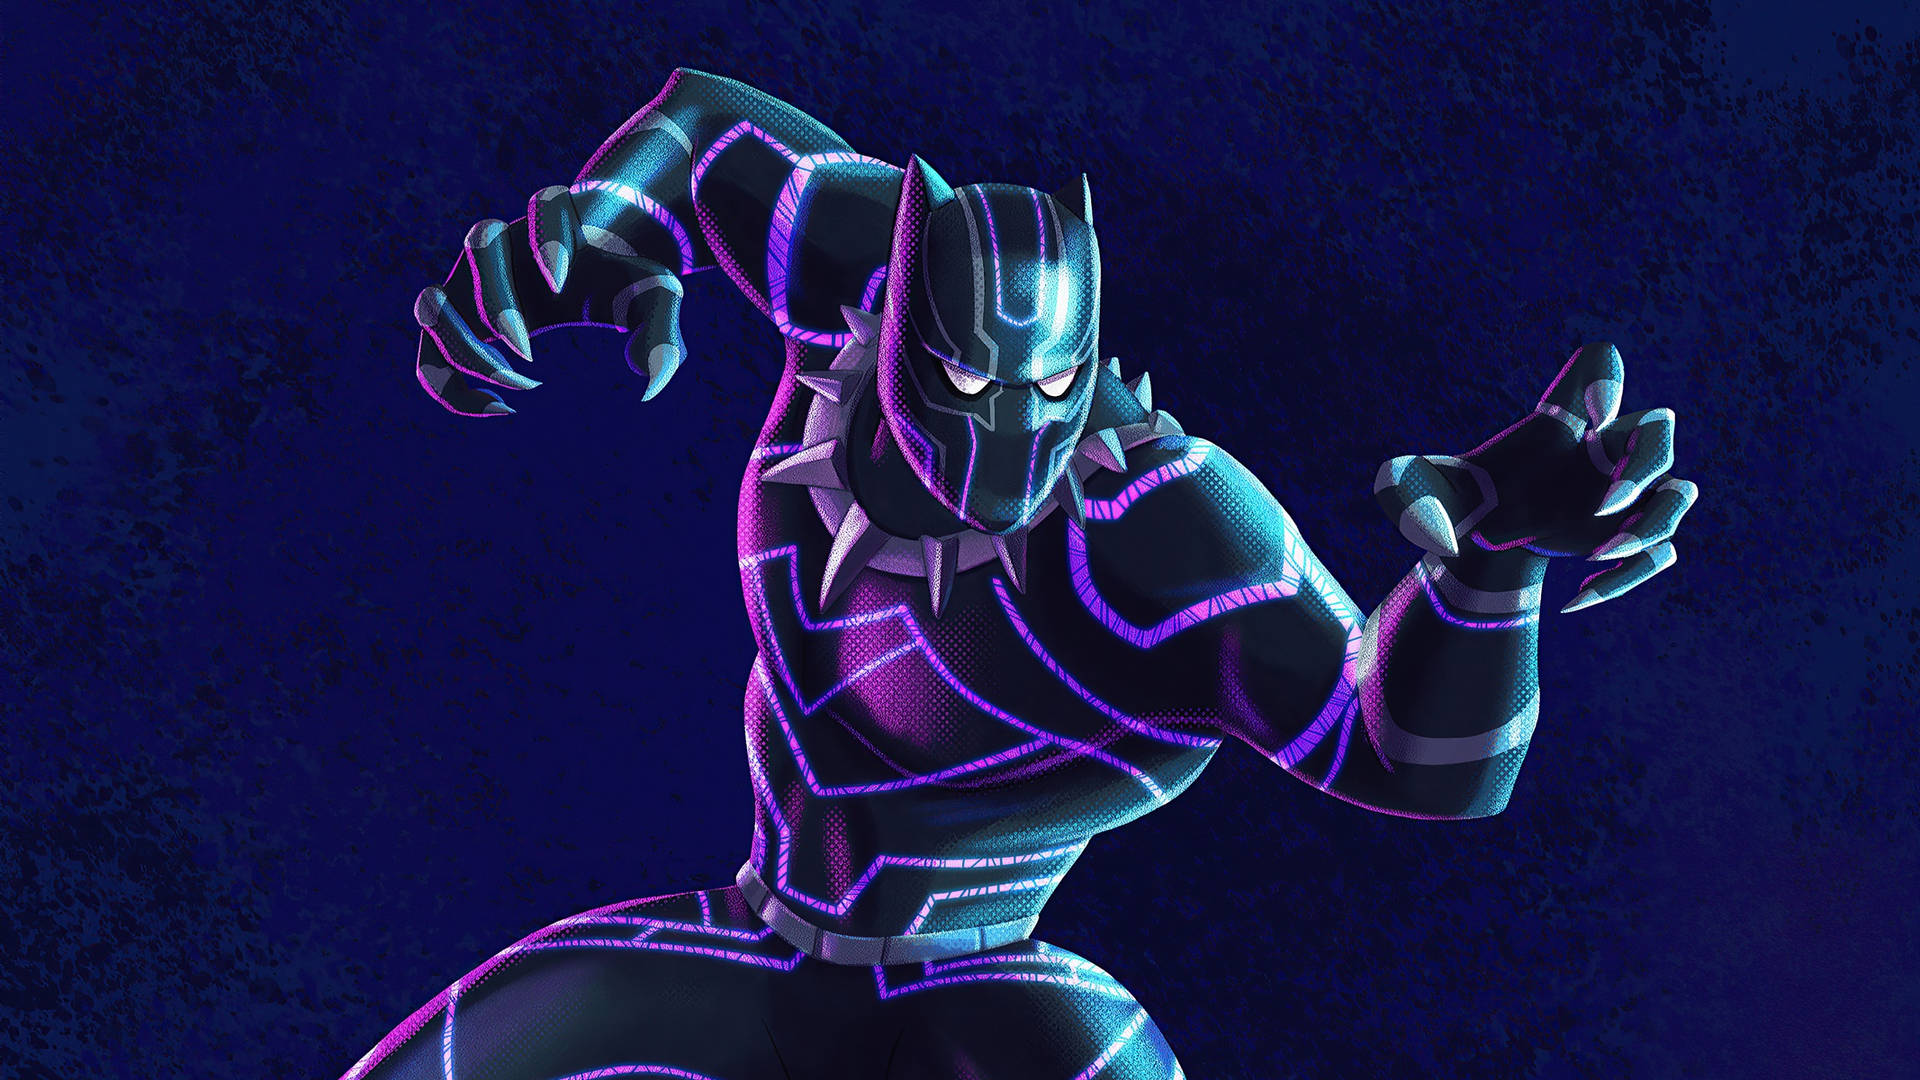 Black Panther Superhero Marvel Comics Art Challenge Background